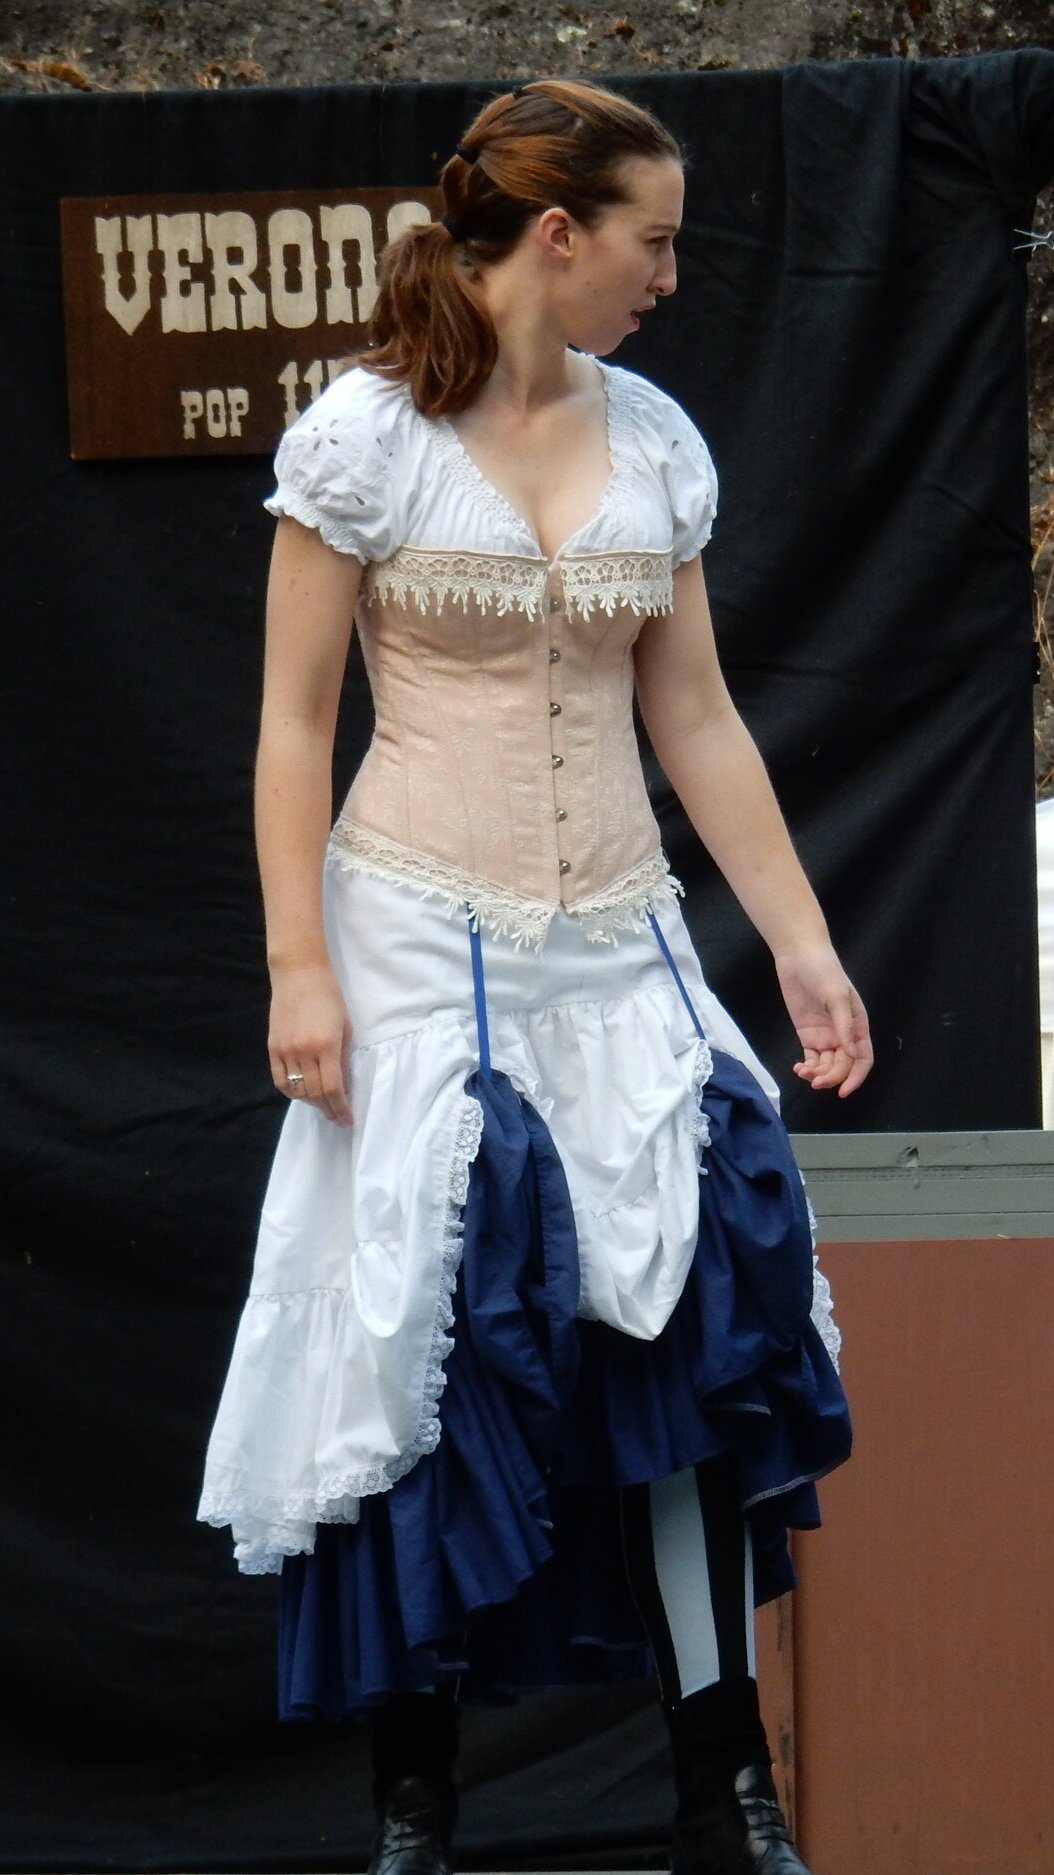 Jessie Spangler as Gregory (Capulet)